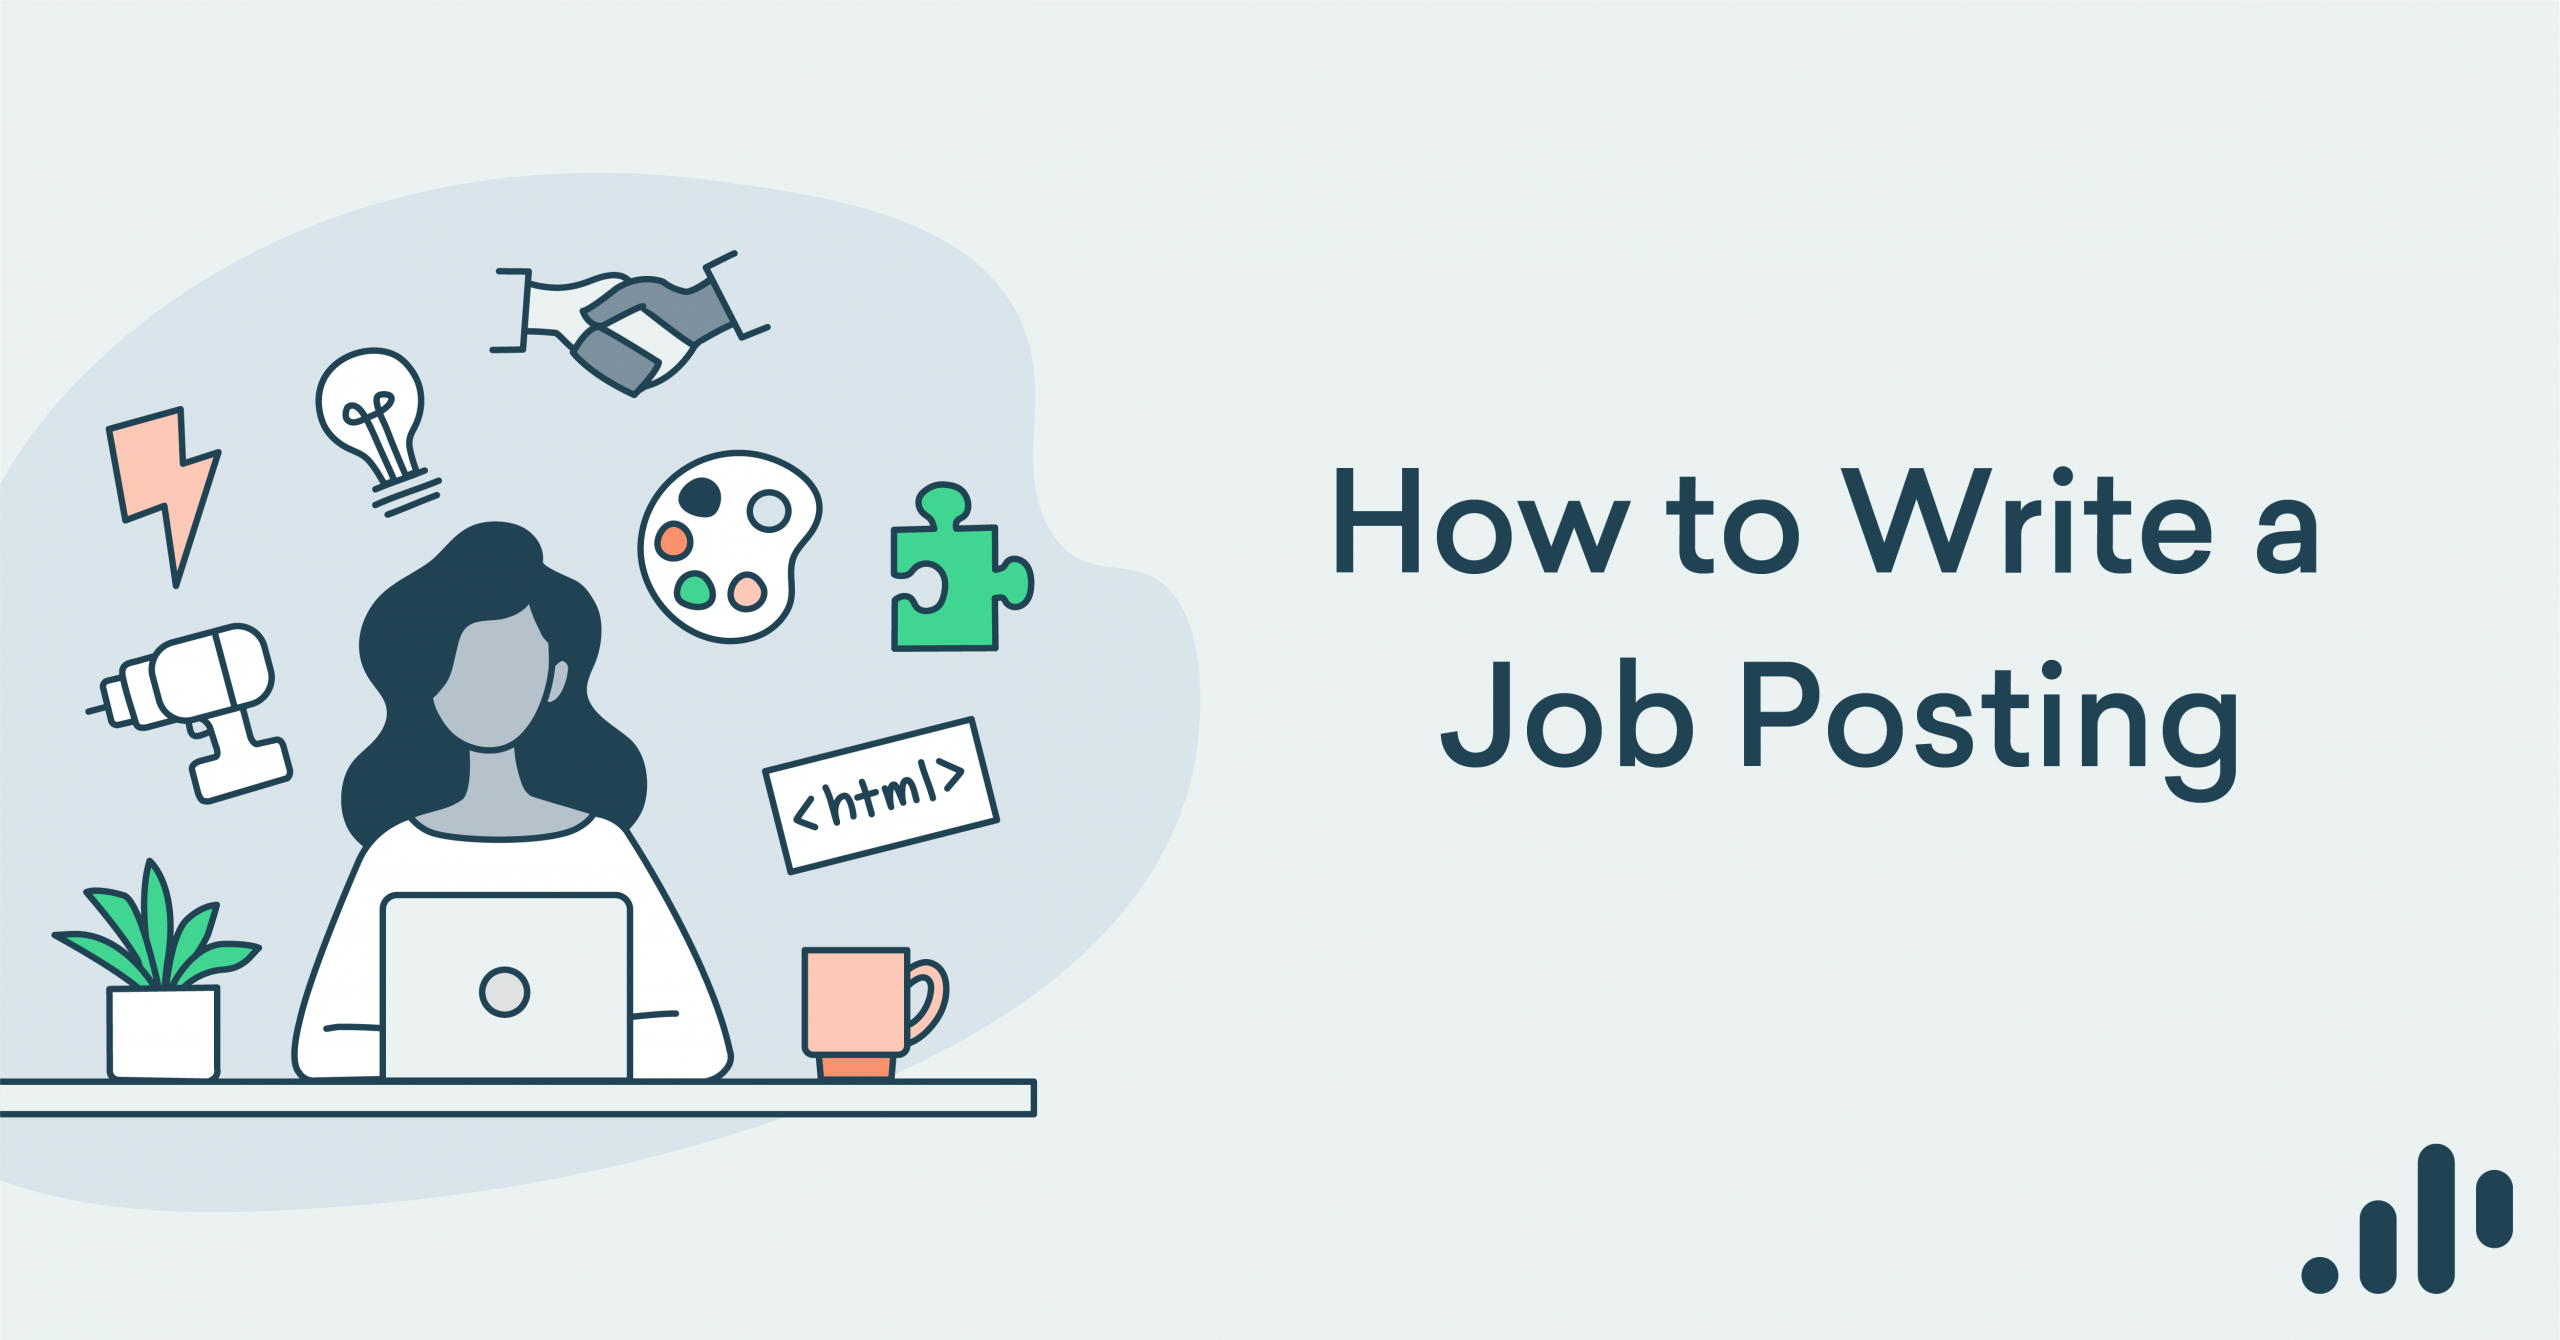 How to Write a Job Posting